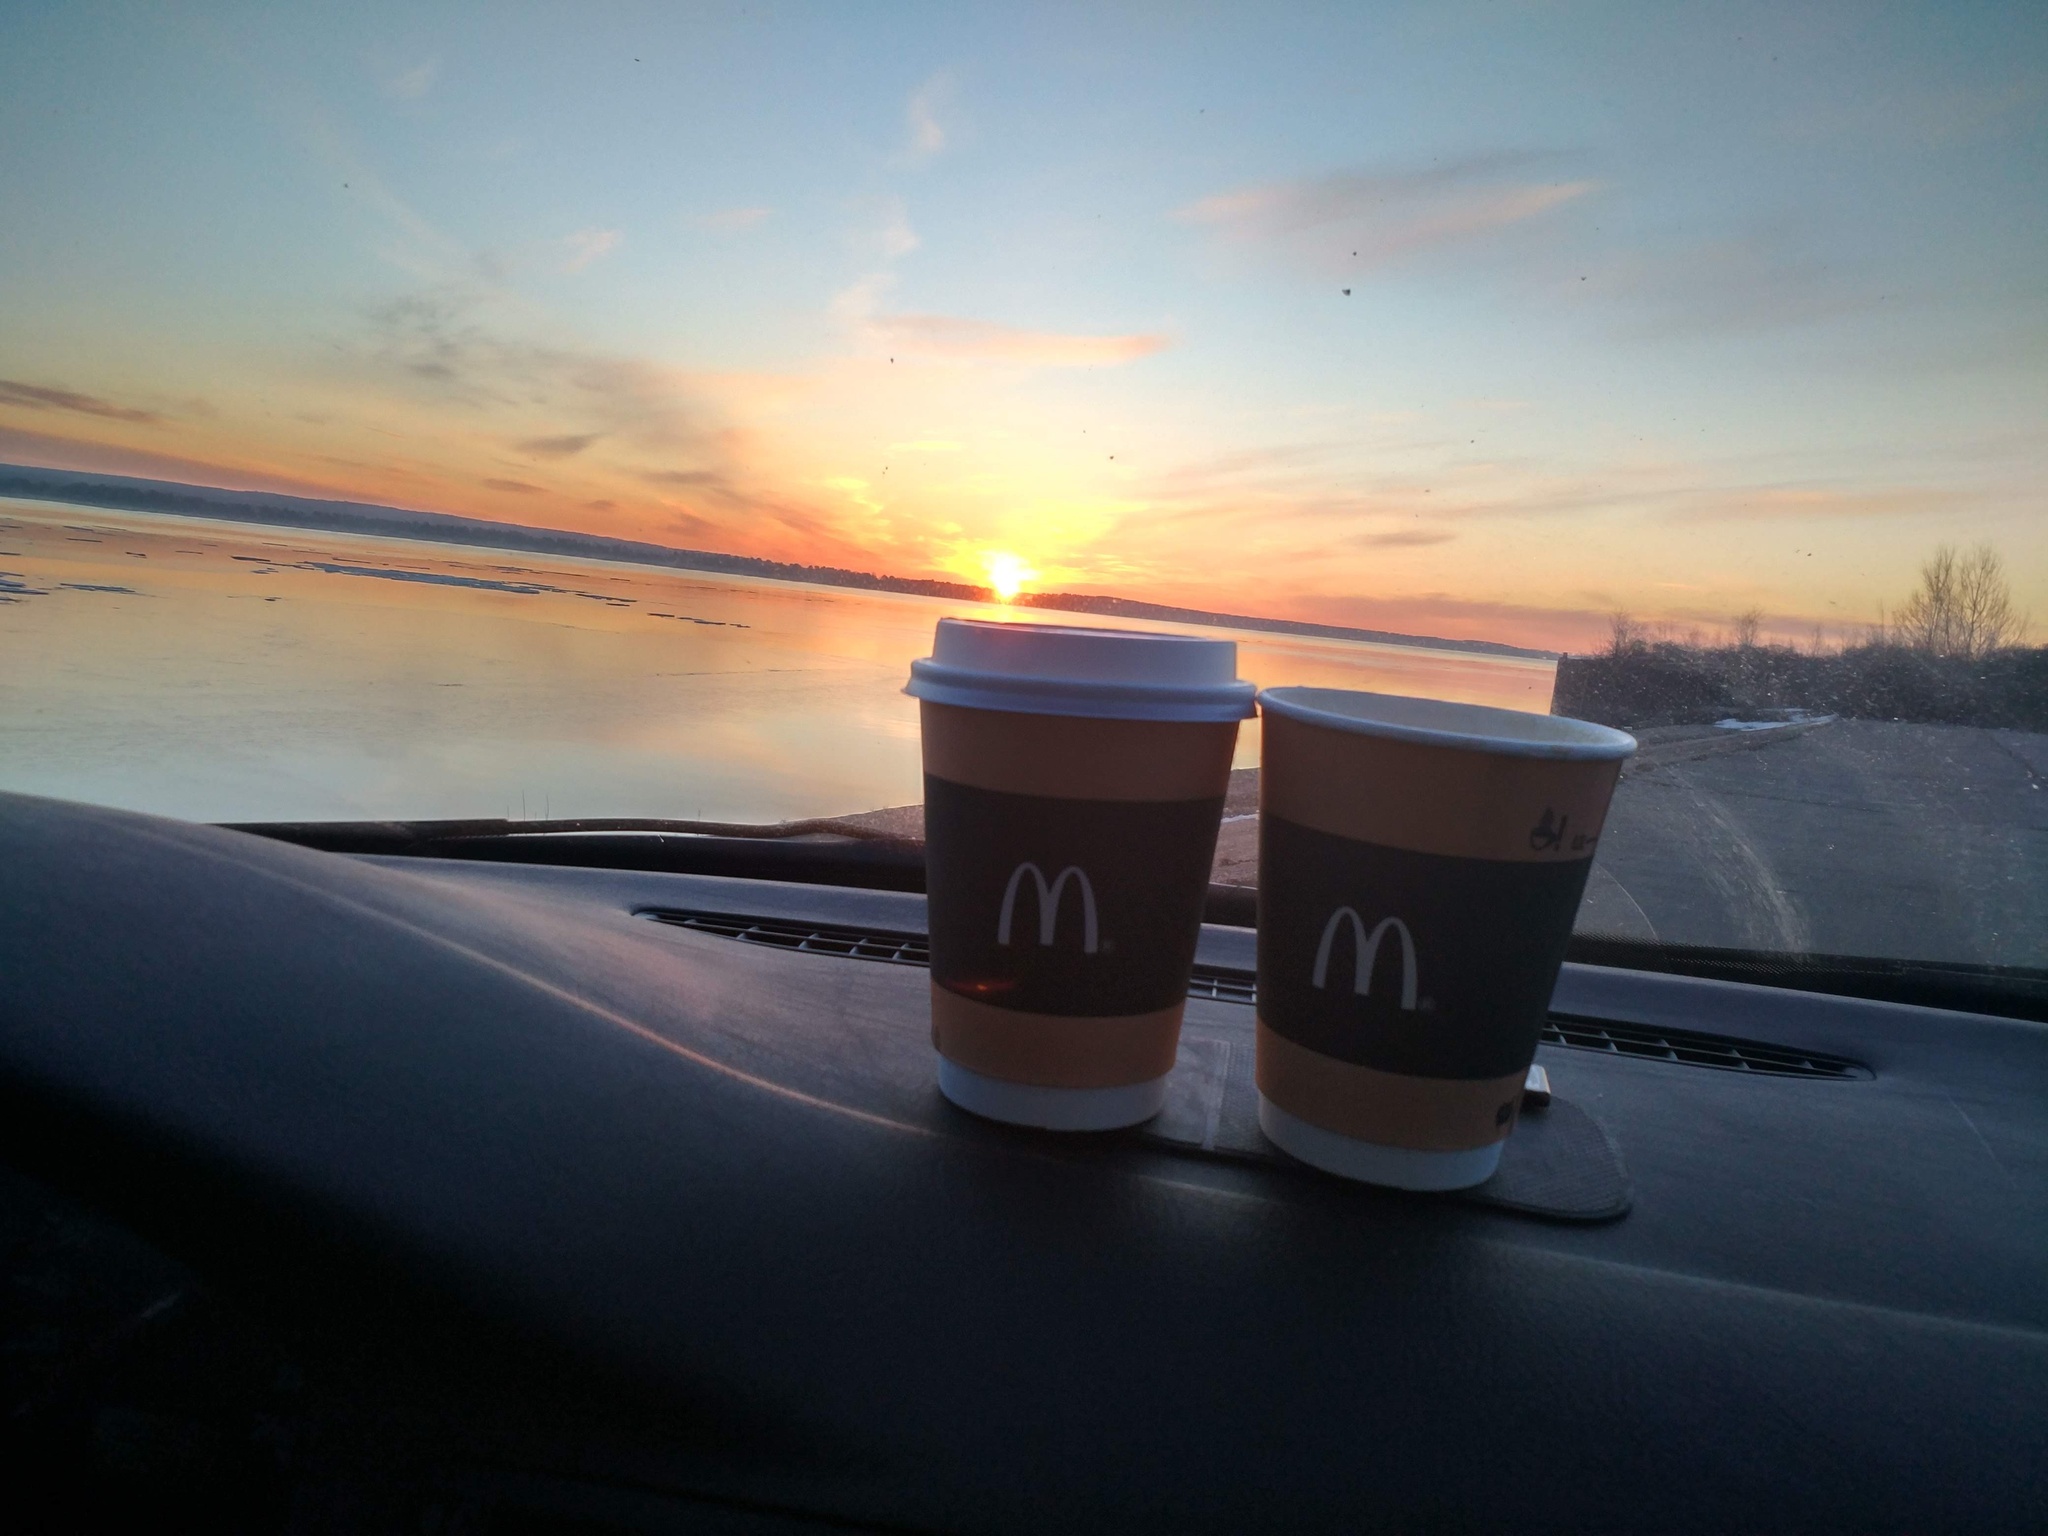 Фото доброе утро с авто